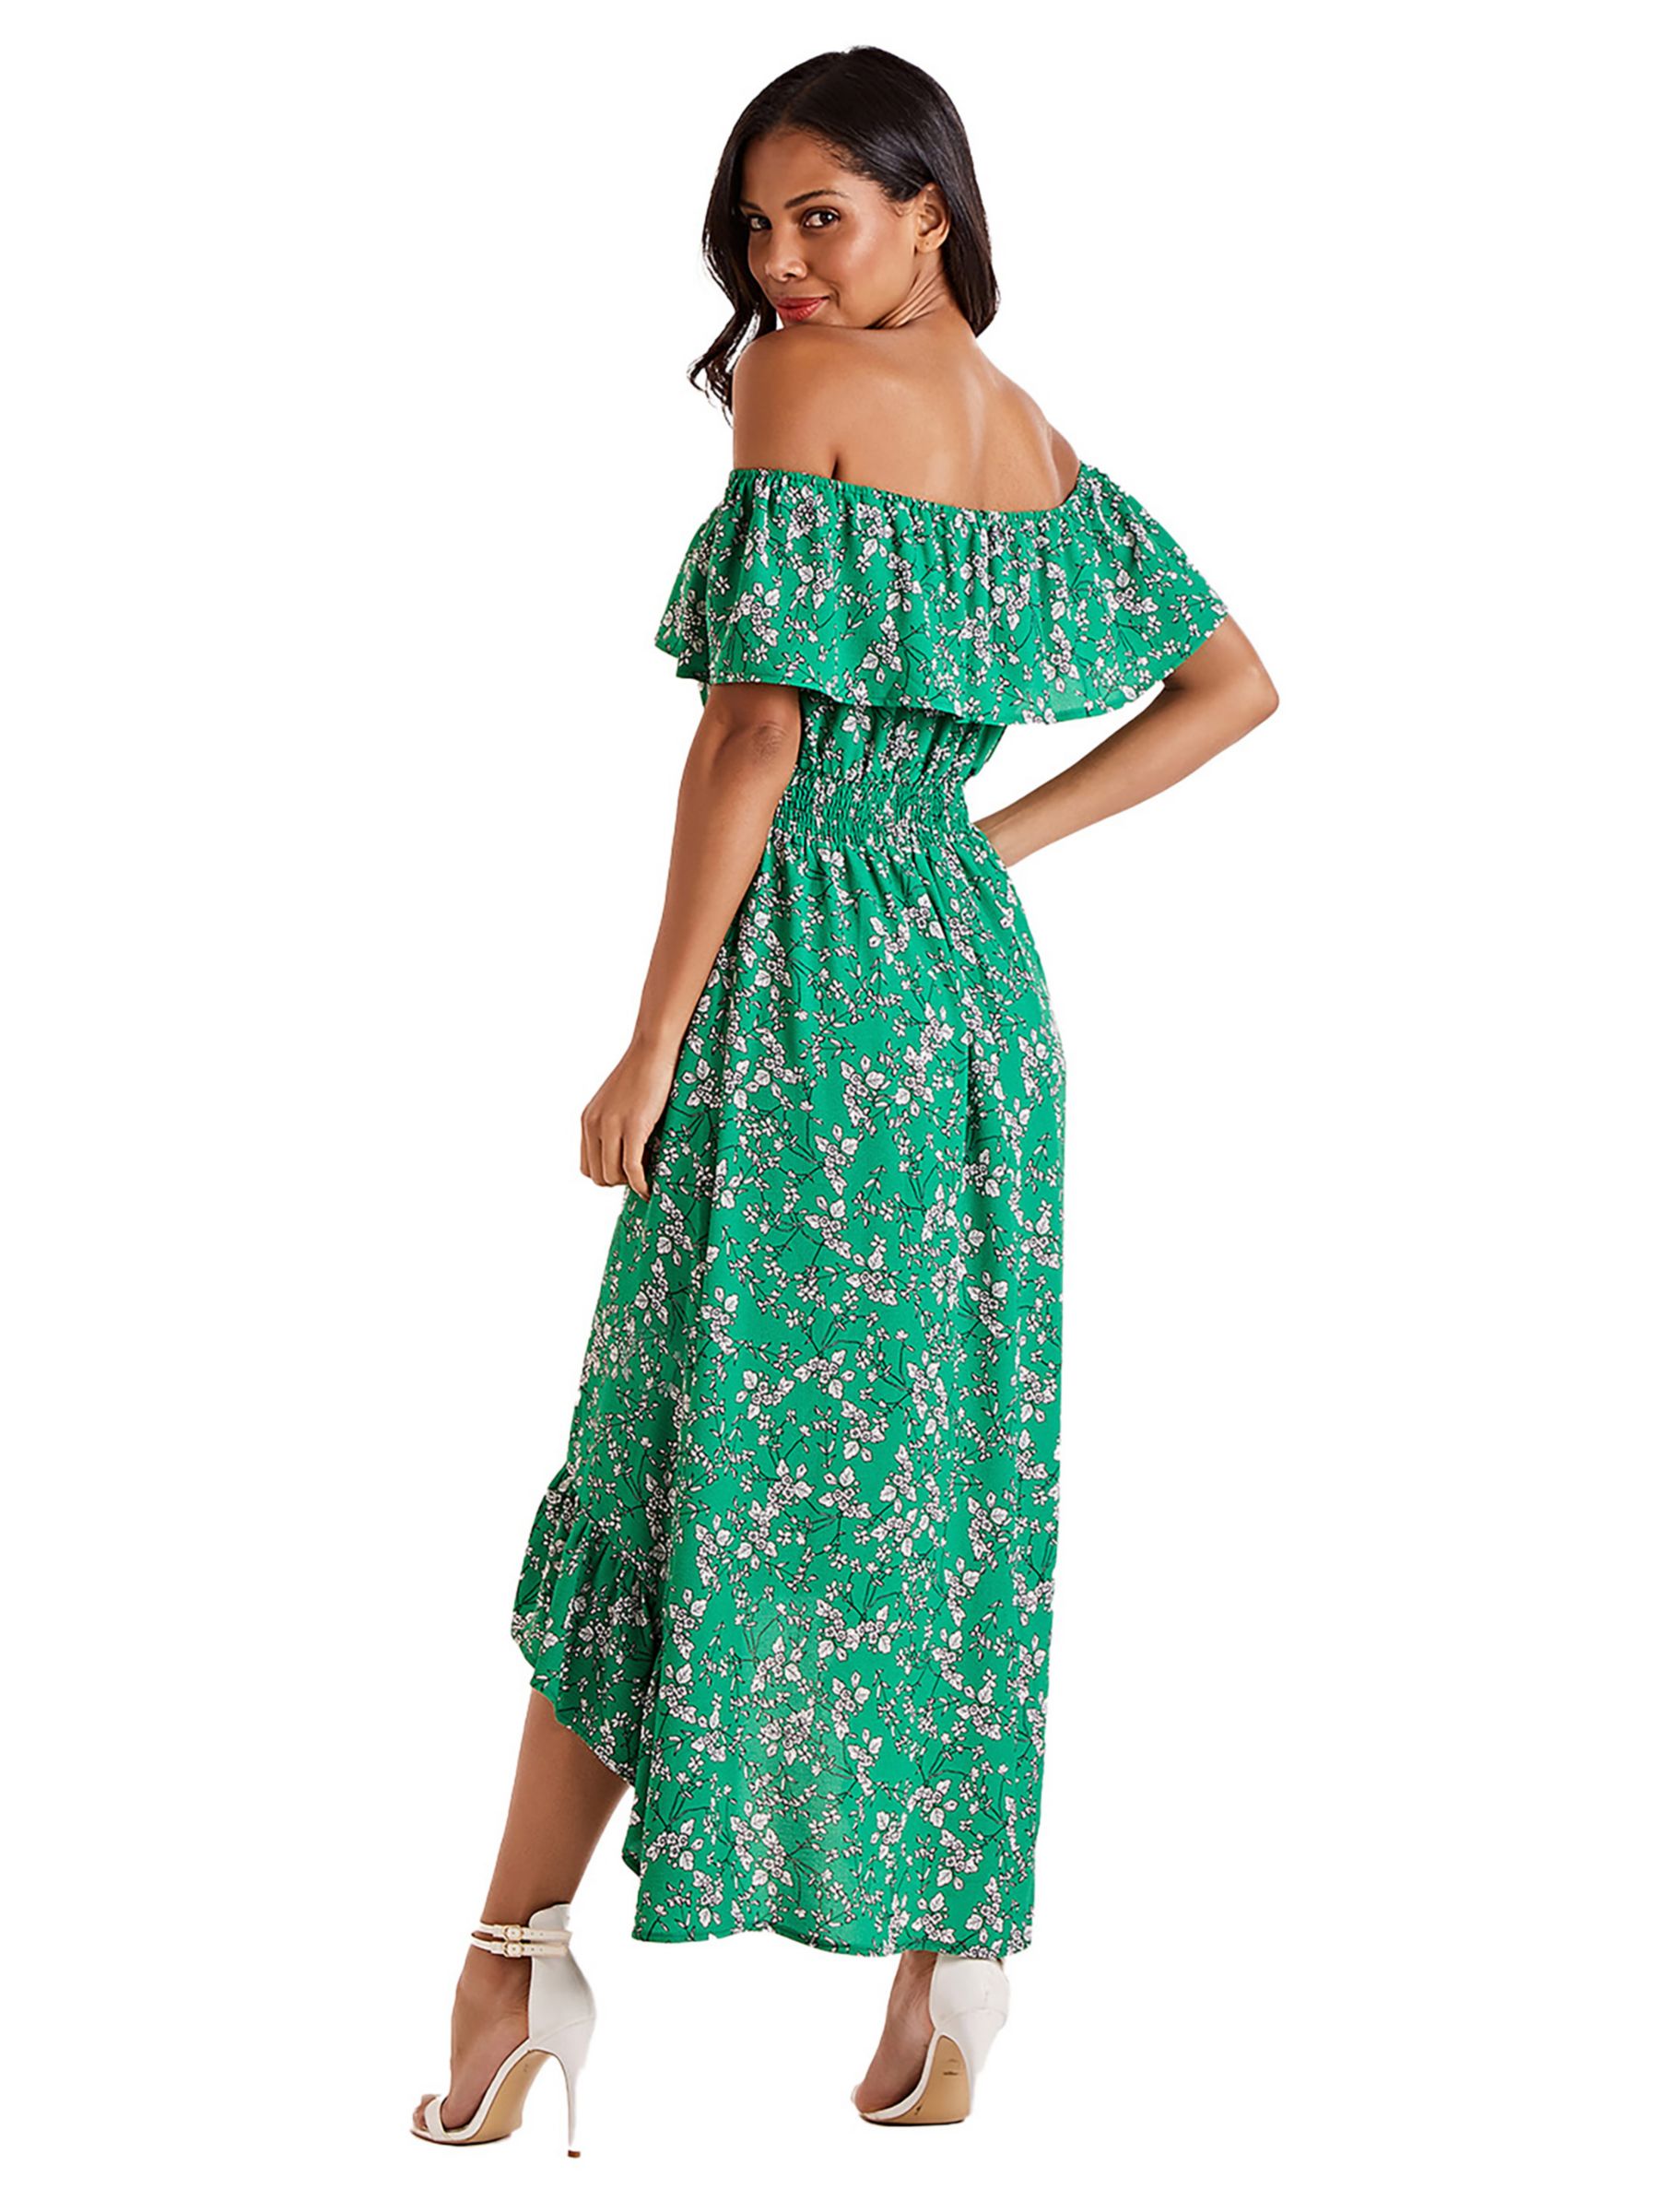 Mela London Ditsy Print Bardot Dipped Hem Dress, Green, 8